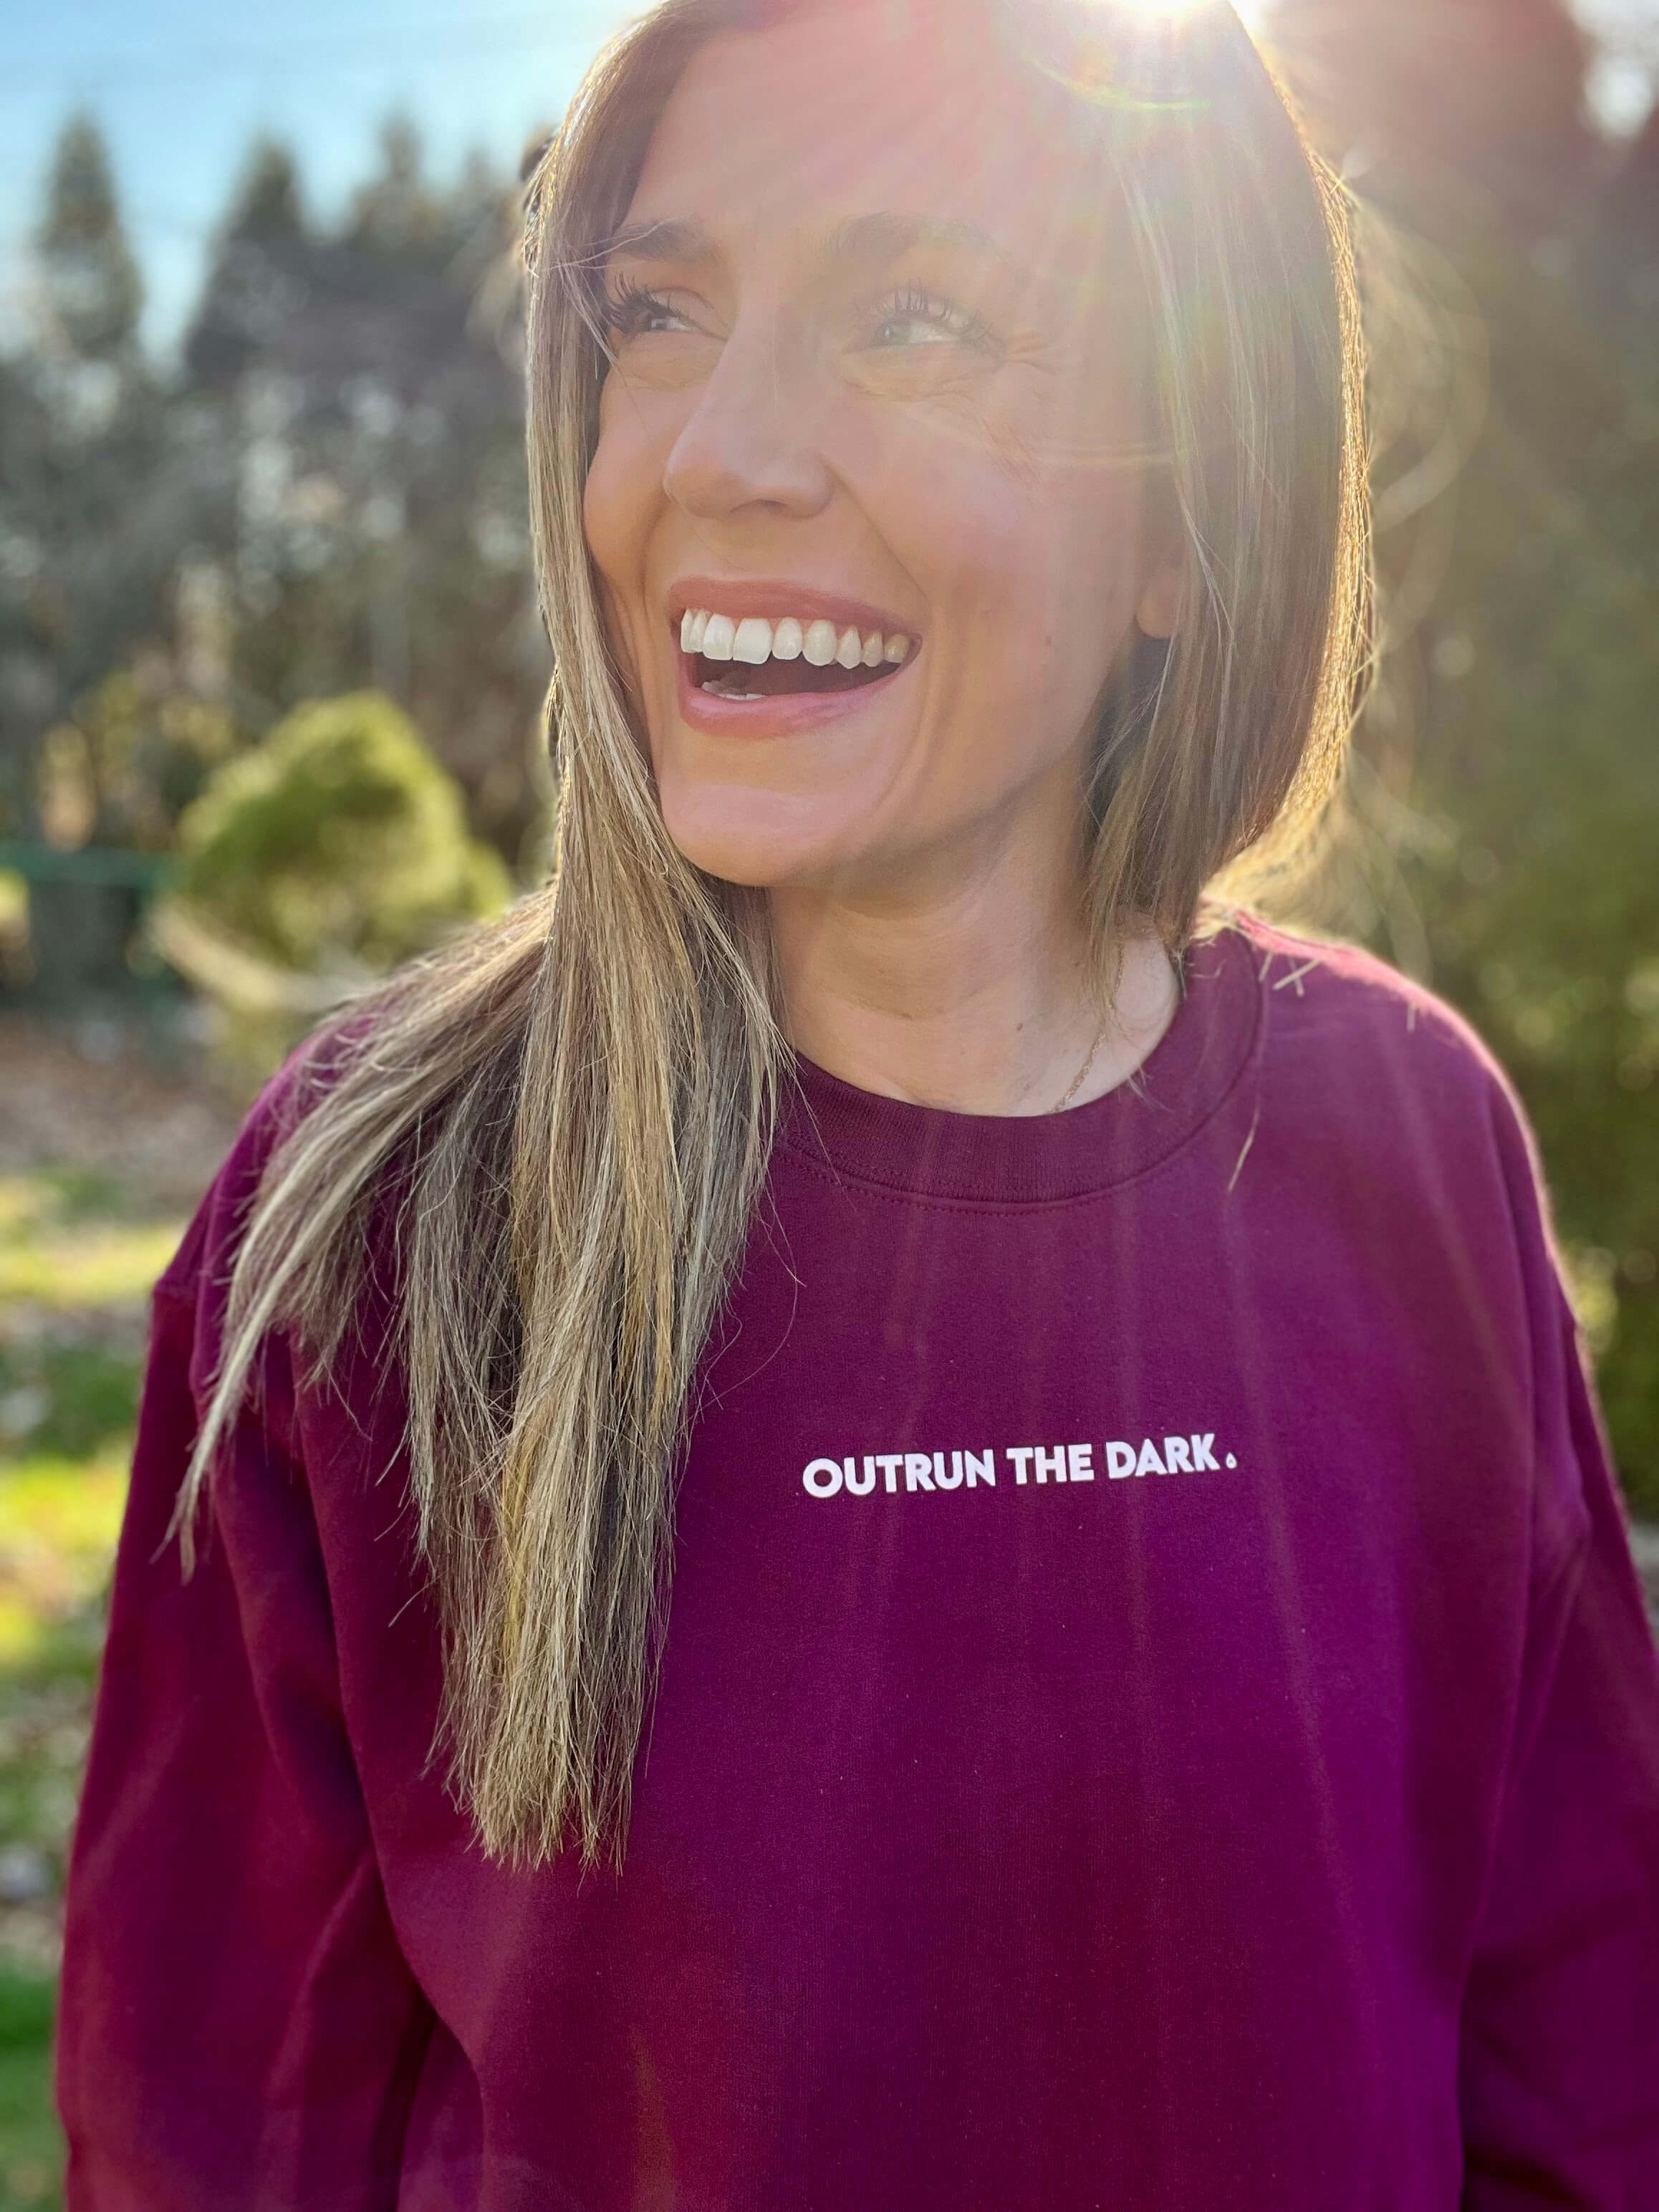 Outrun the dark Women's Sweatshirt